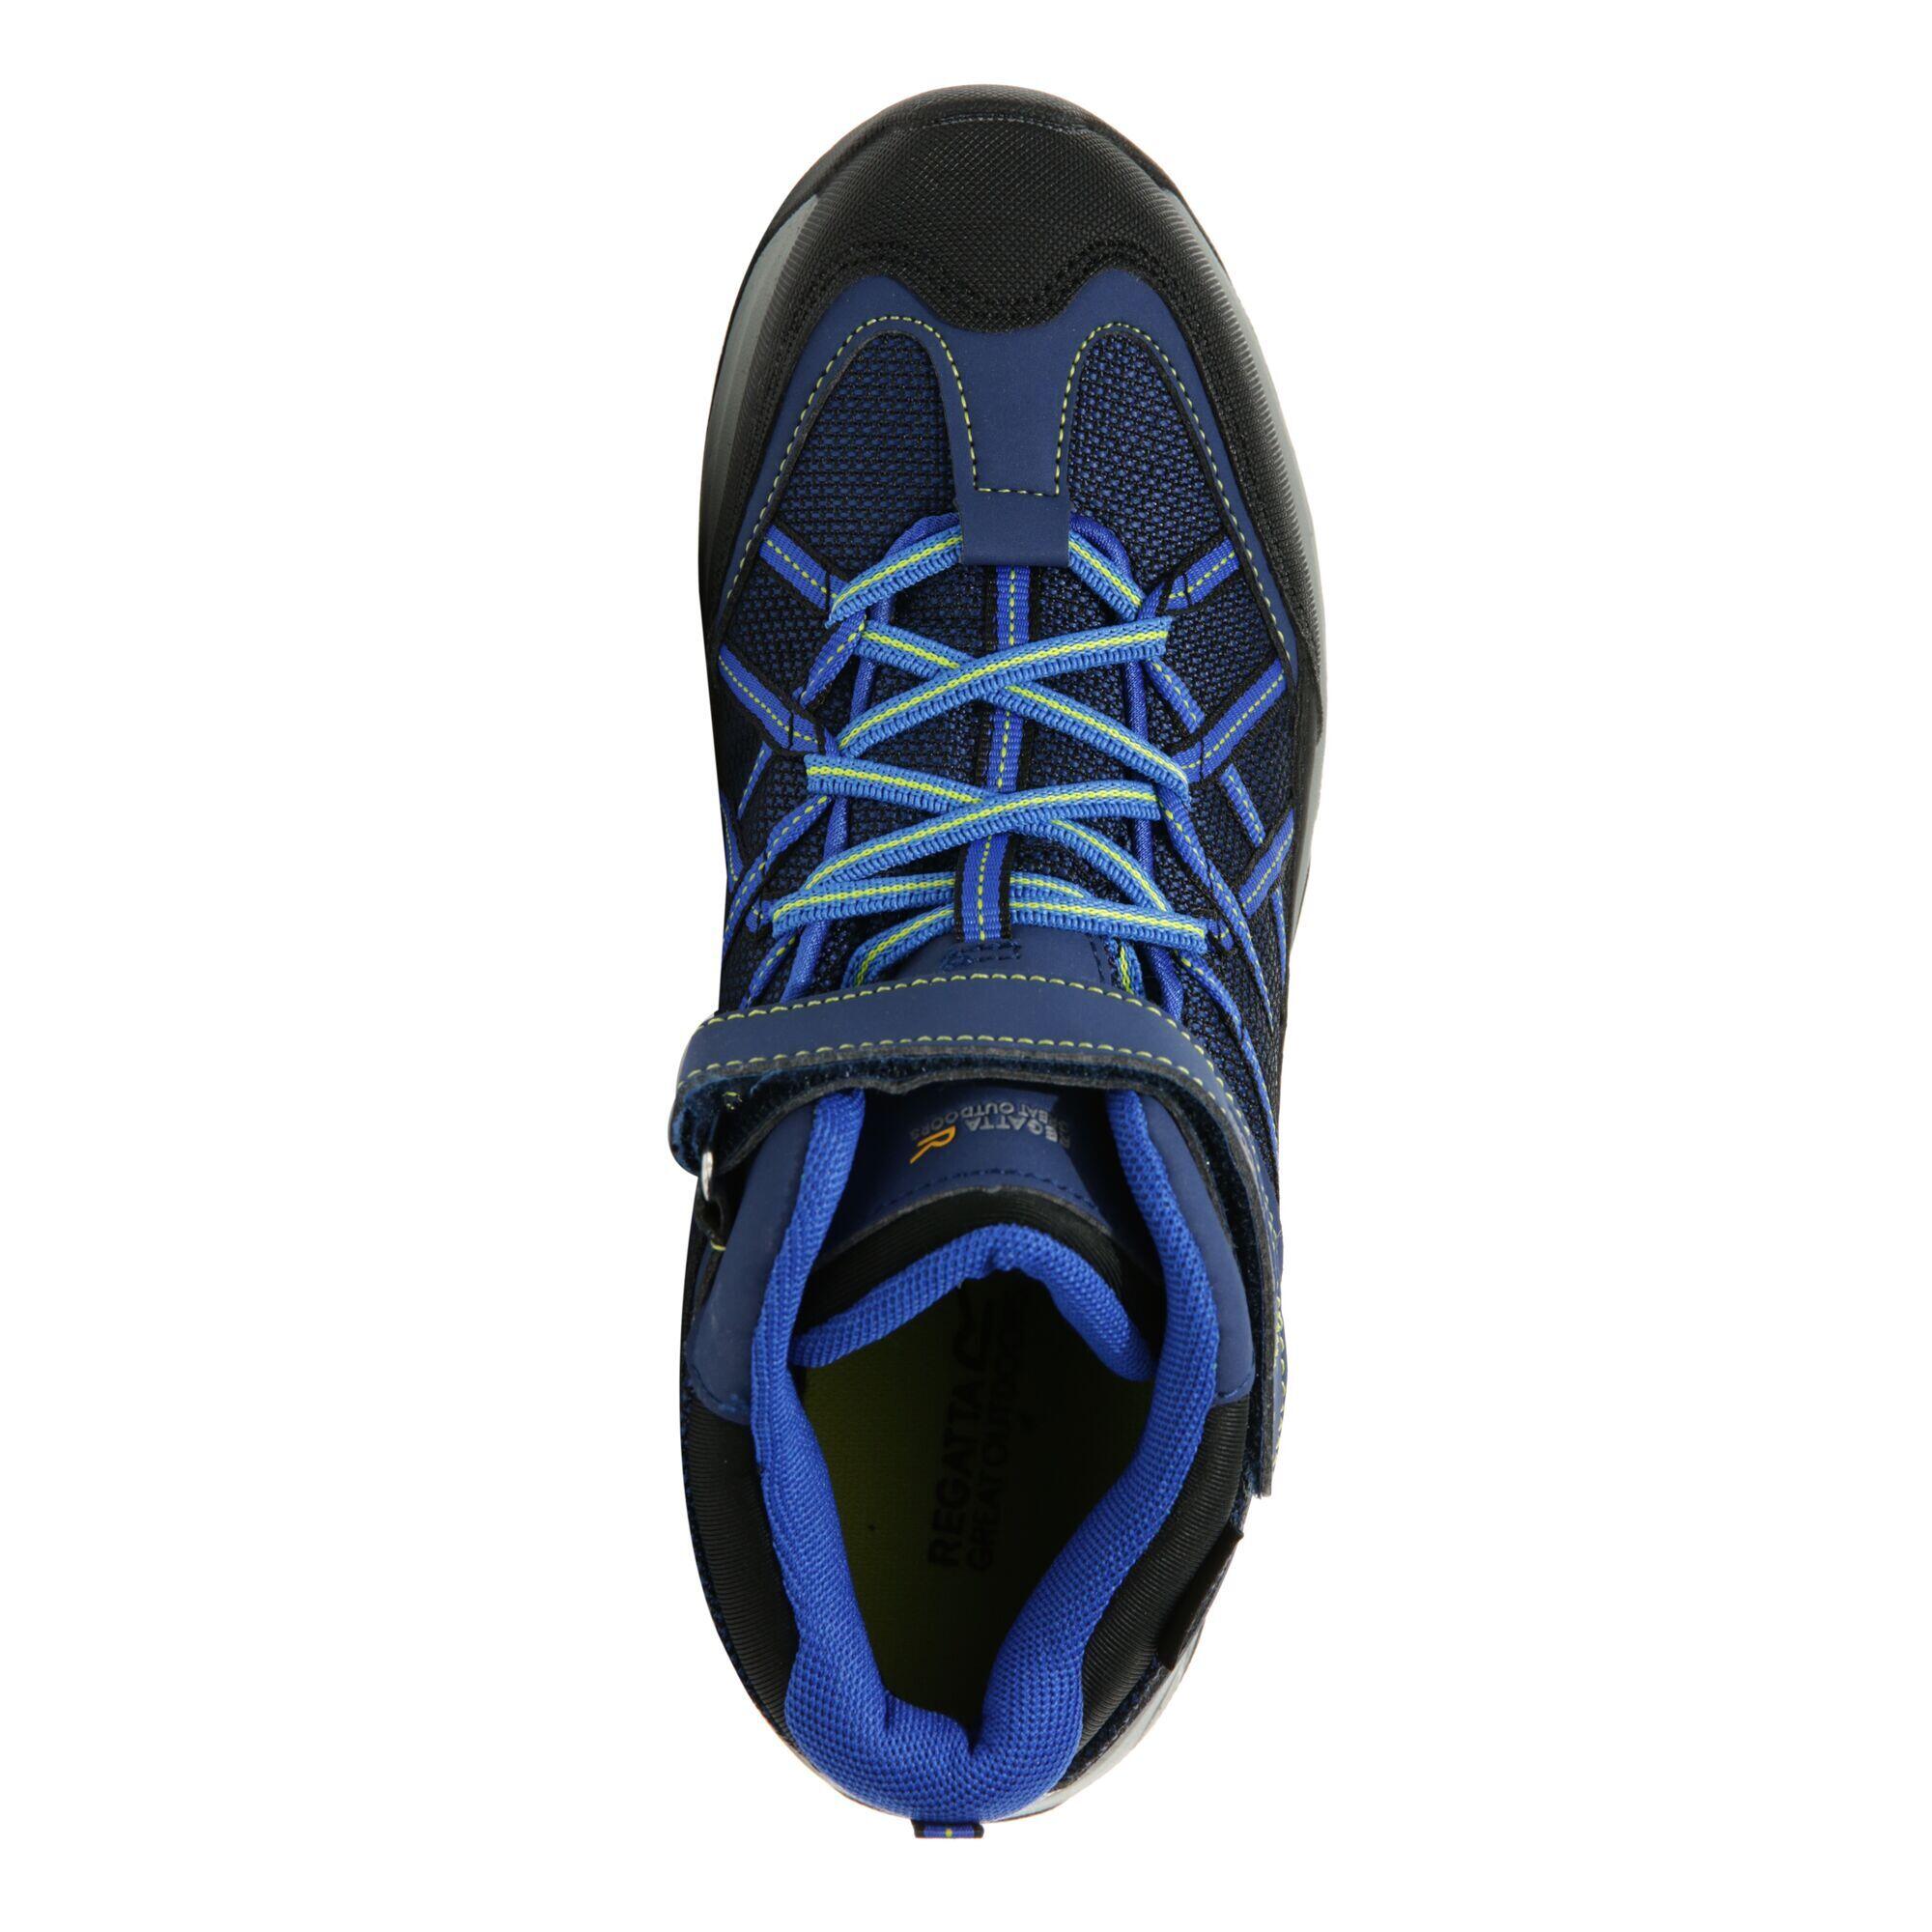 Samaris V Kids' Hiking Waterproof Mid Boots - Dark Blue/Neon Yellow 6/6